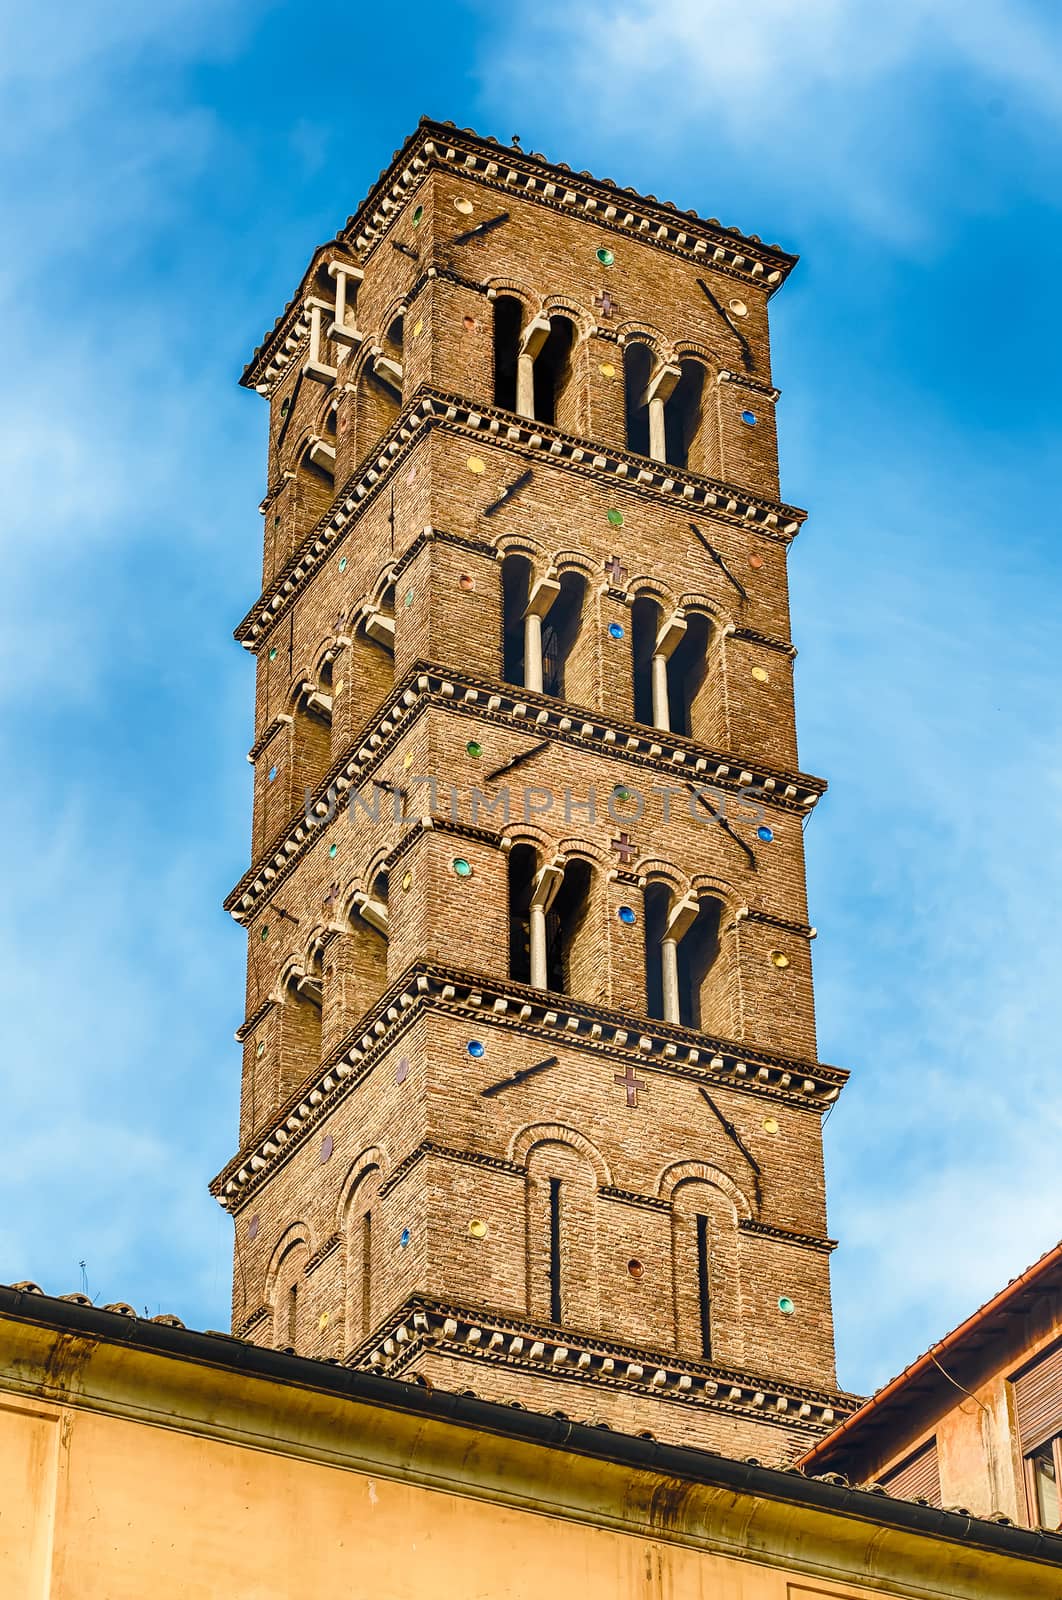 Bell Tower at the Church of Santa Francesca Romana, Rome by marcorubino